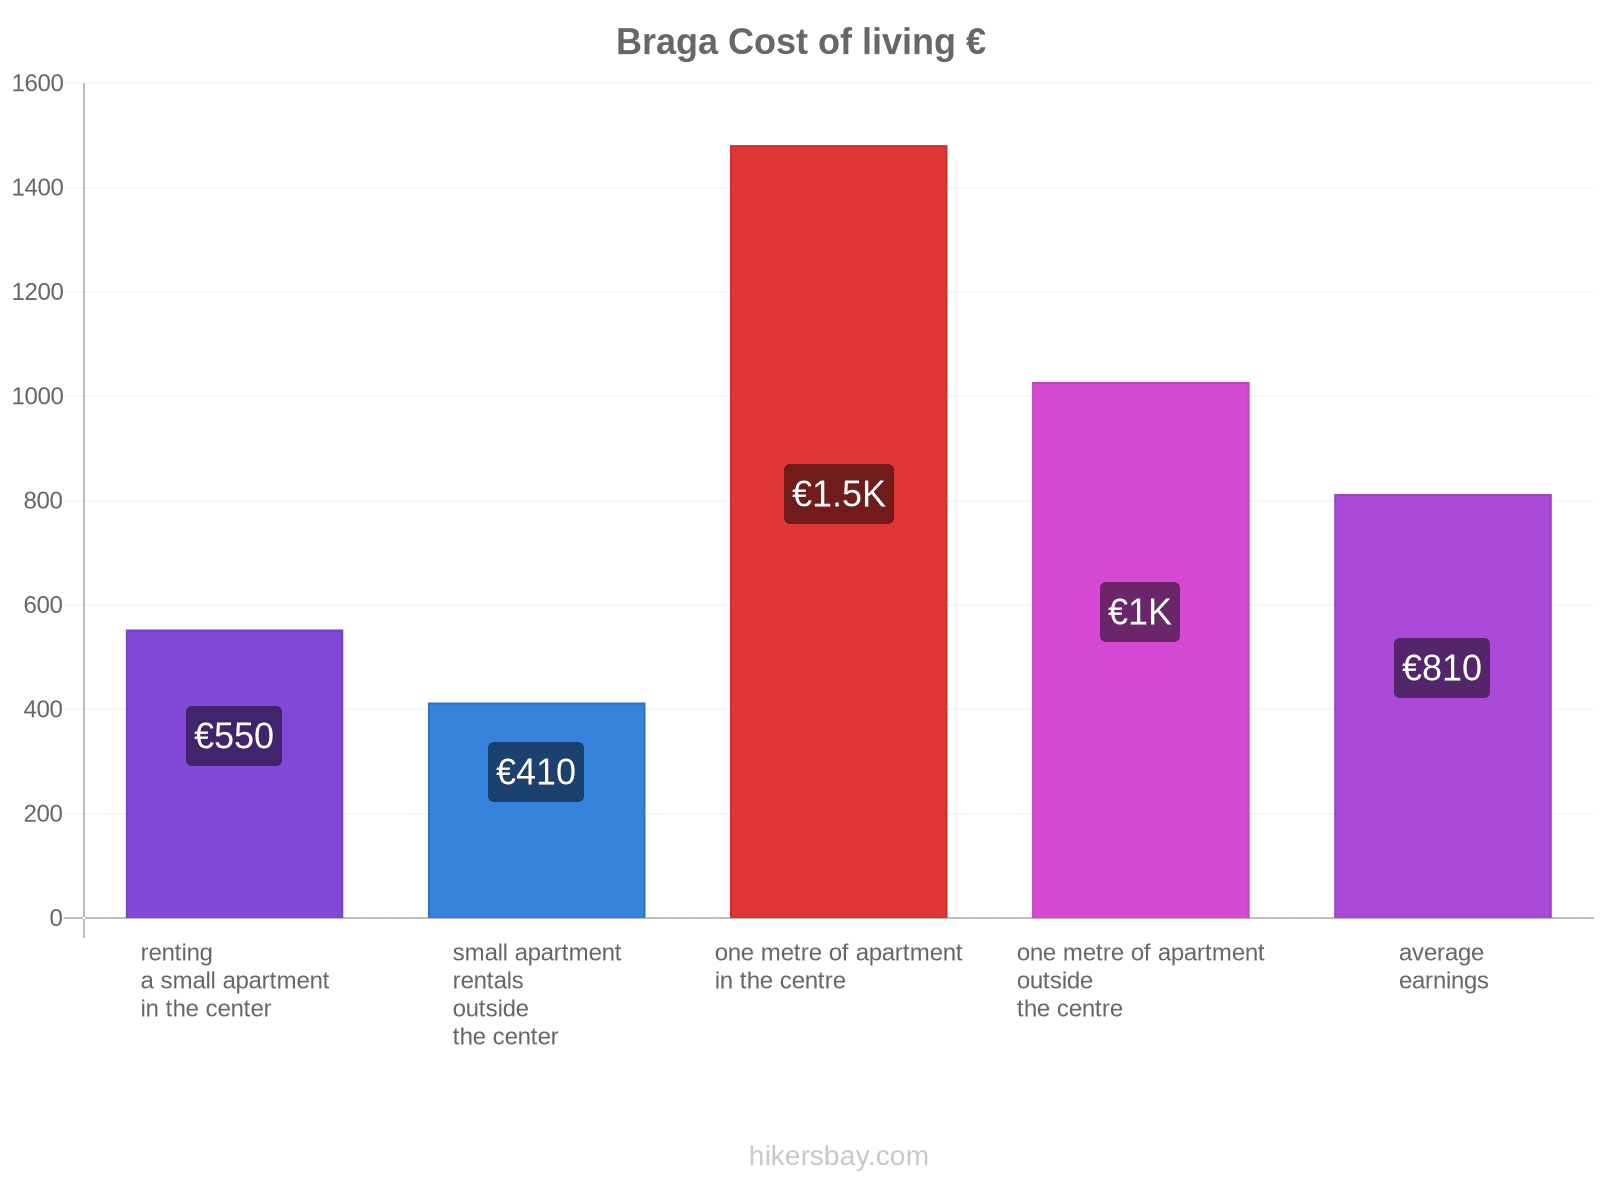 Braga cost of living hikersbay.com